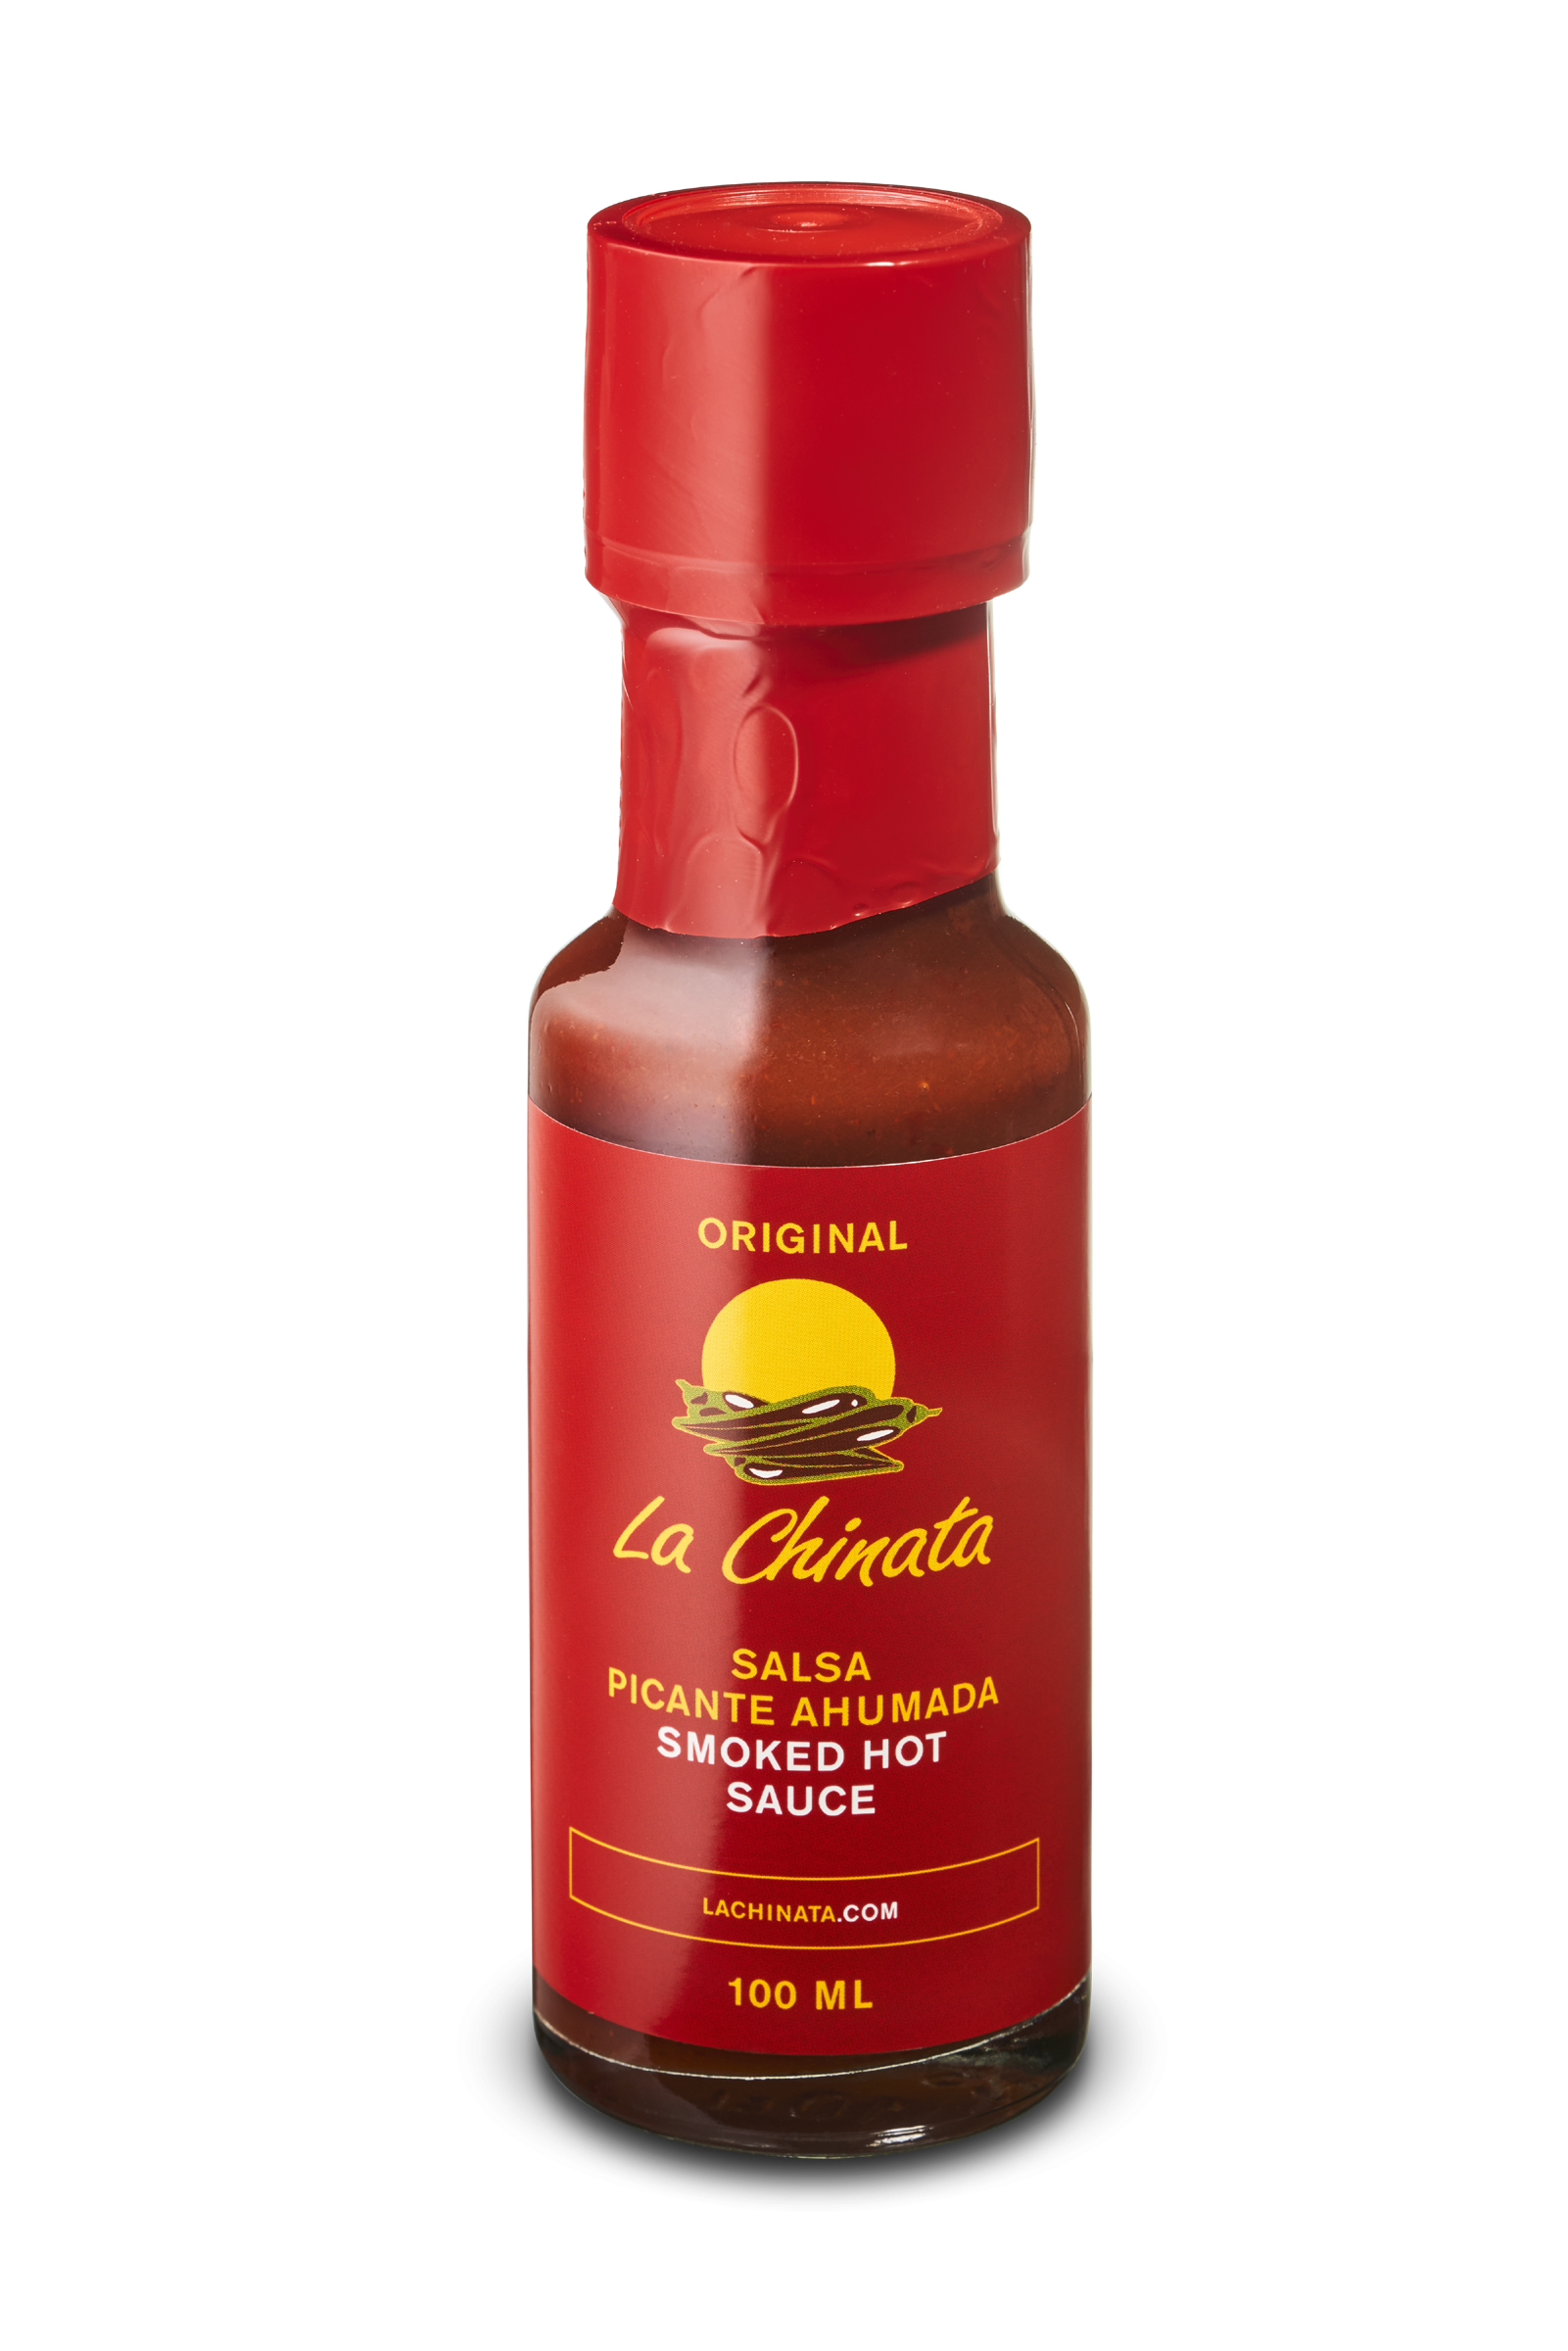 Smoked Hot Sauce "La Chinata" 100 ml.